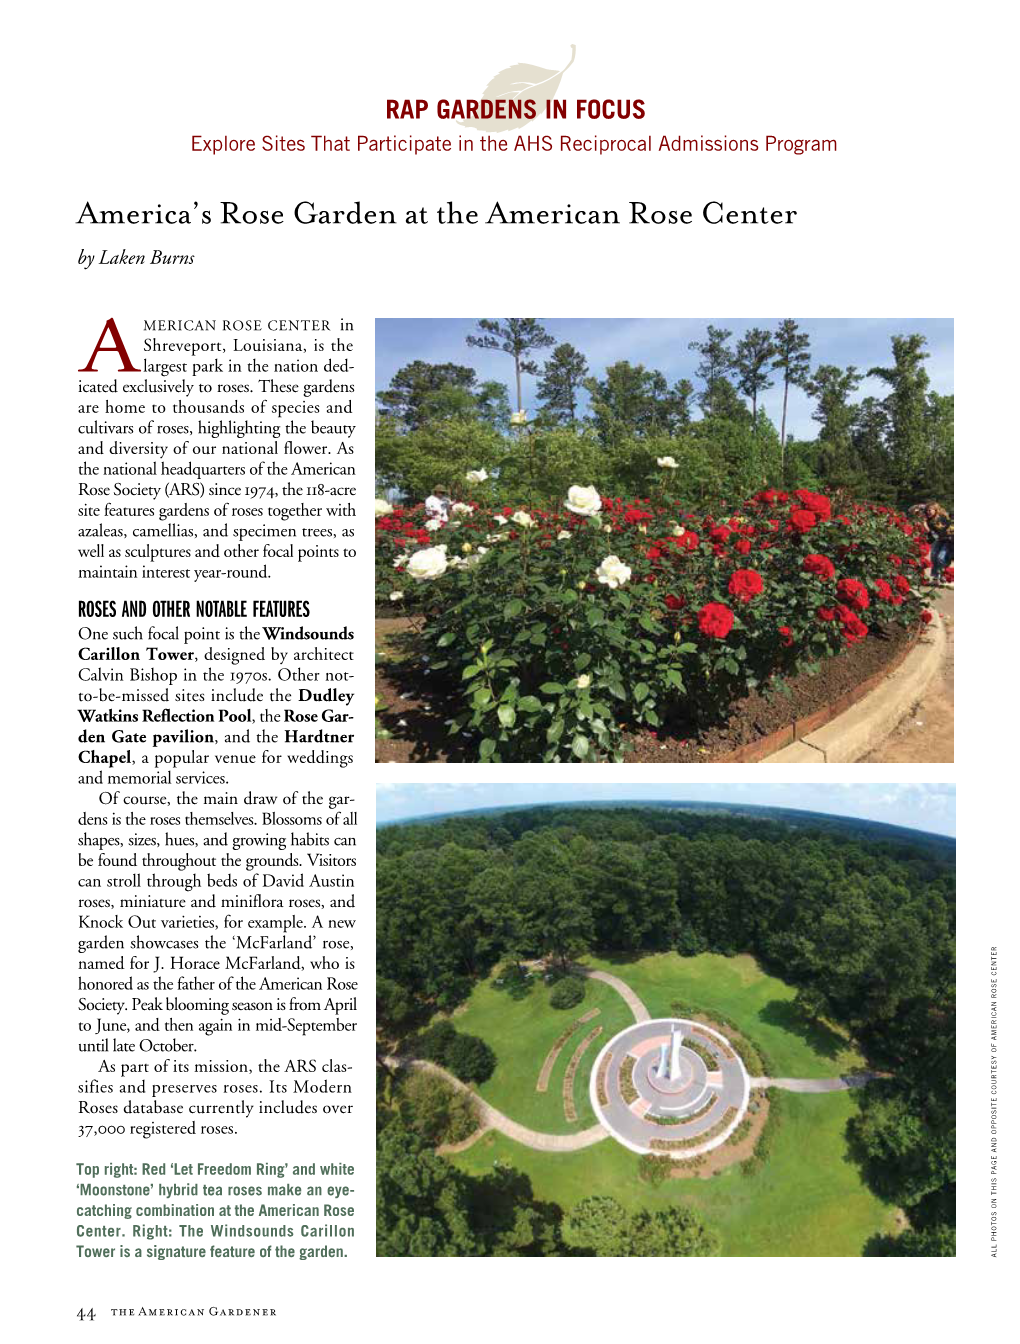 America's Rose Garden at the American Rose Center